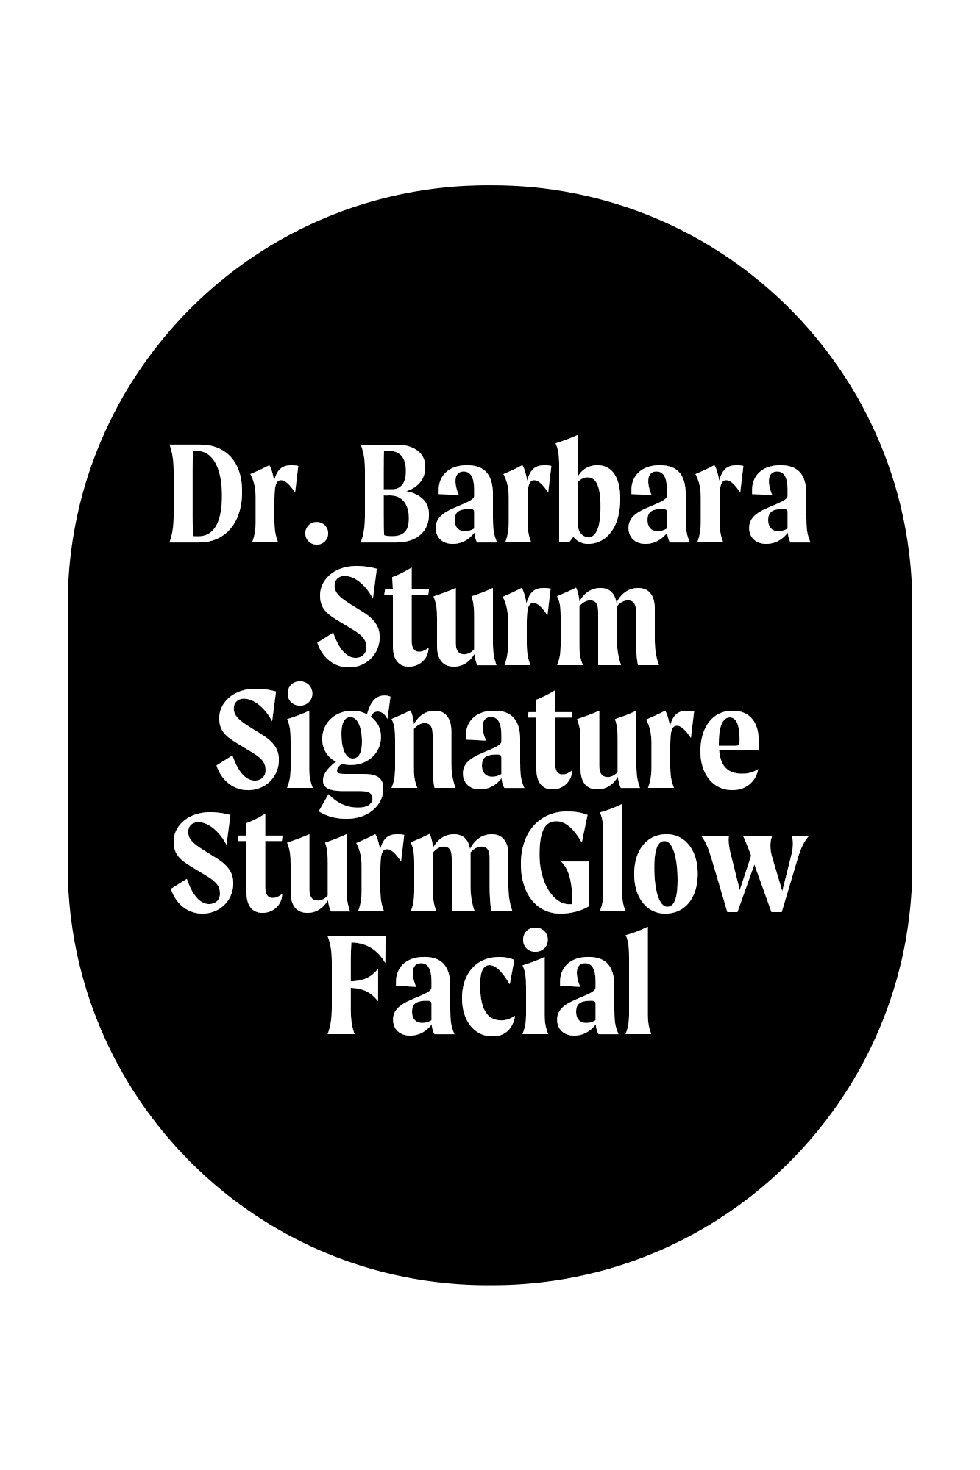 Dr. Barbara Sturm Signature SturmGlow Facial